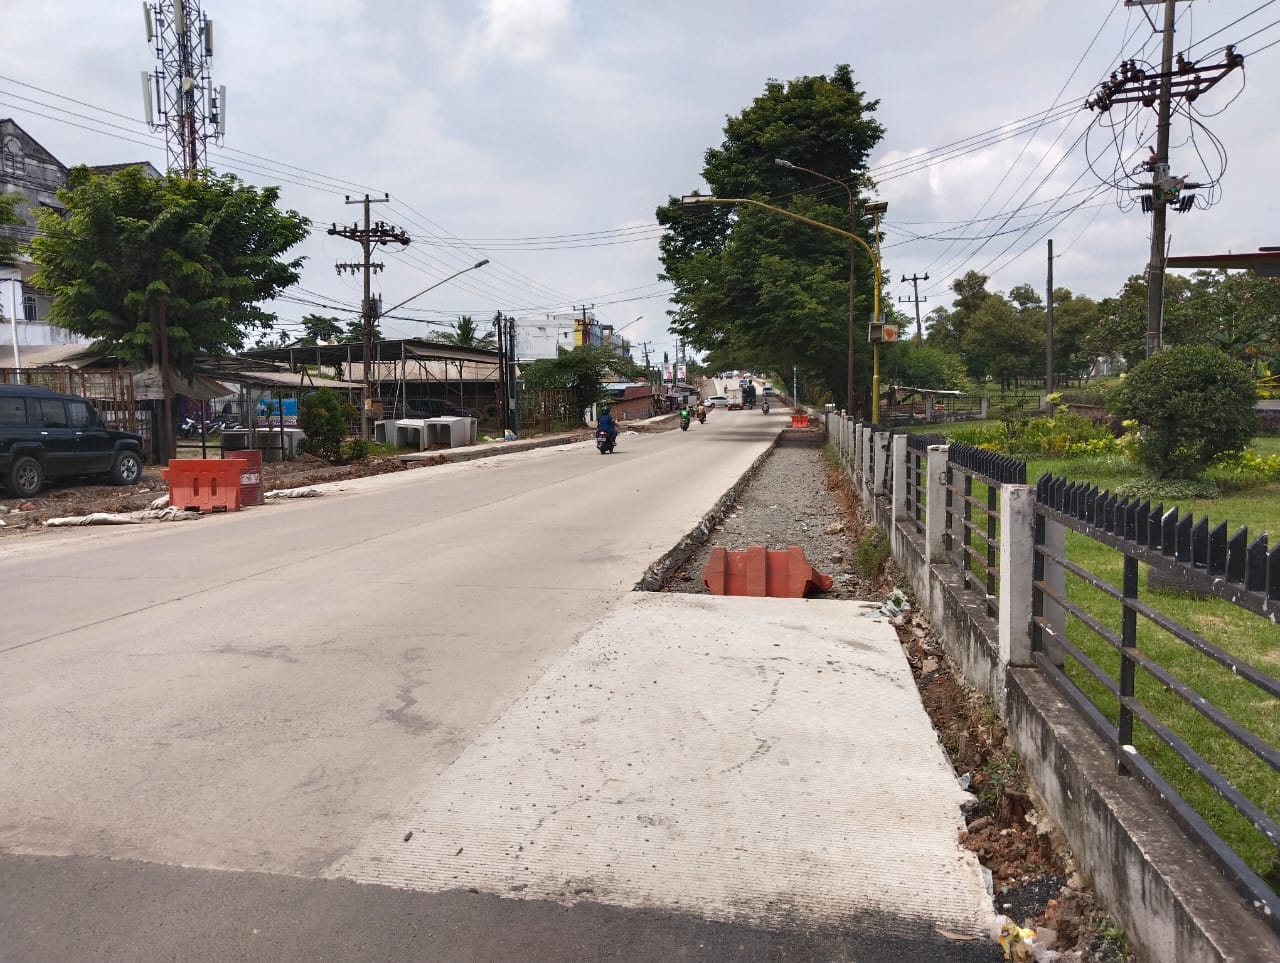 3 Bulan Perbaikan Jl SMB II Palembang Belum Selesai